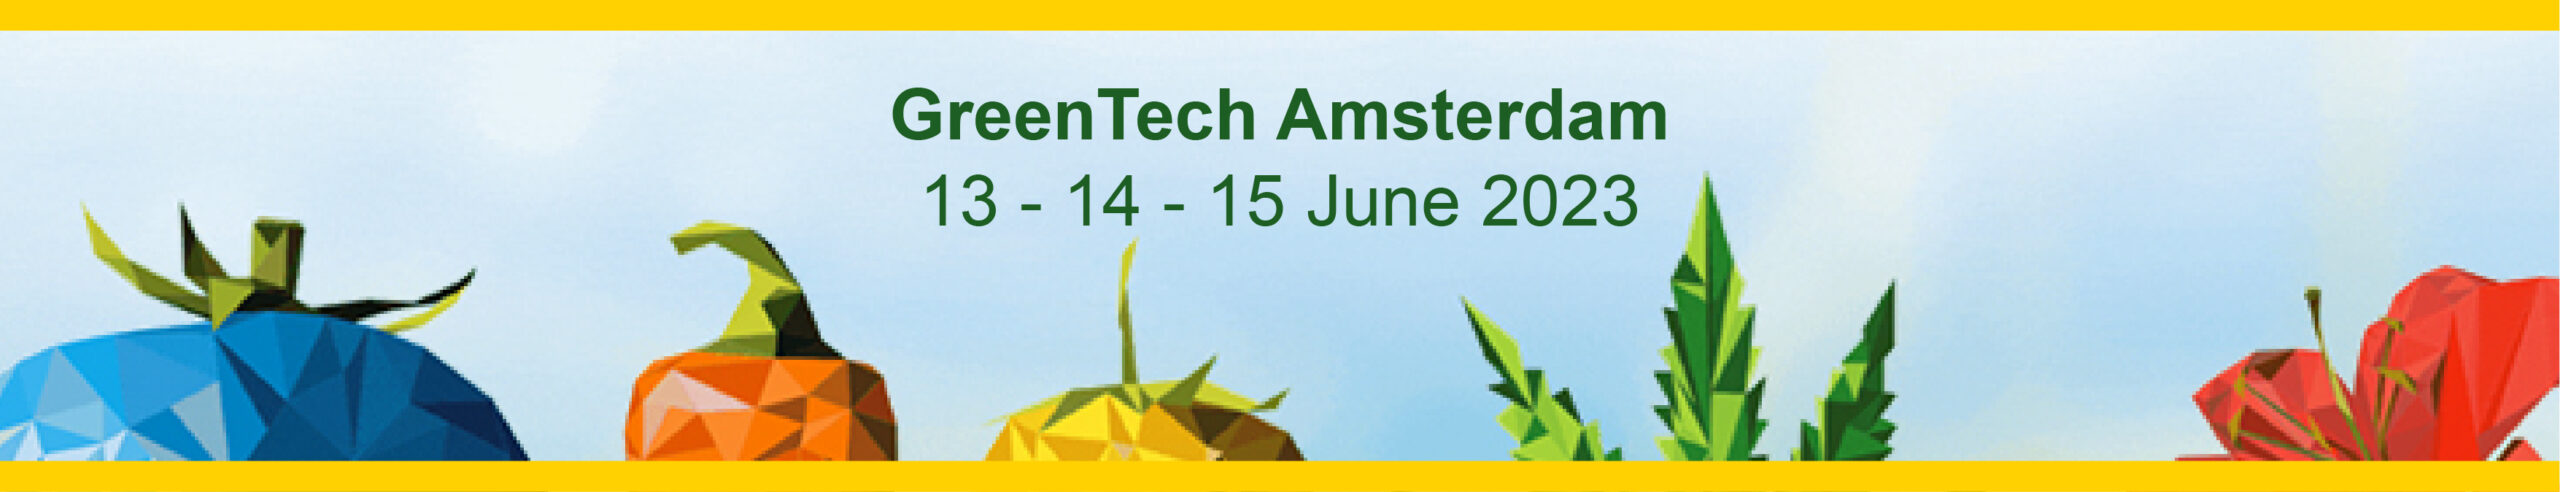 GreenTech 2023 Amsterdam